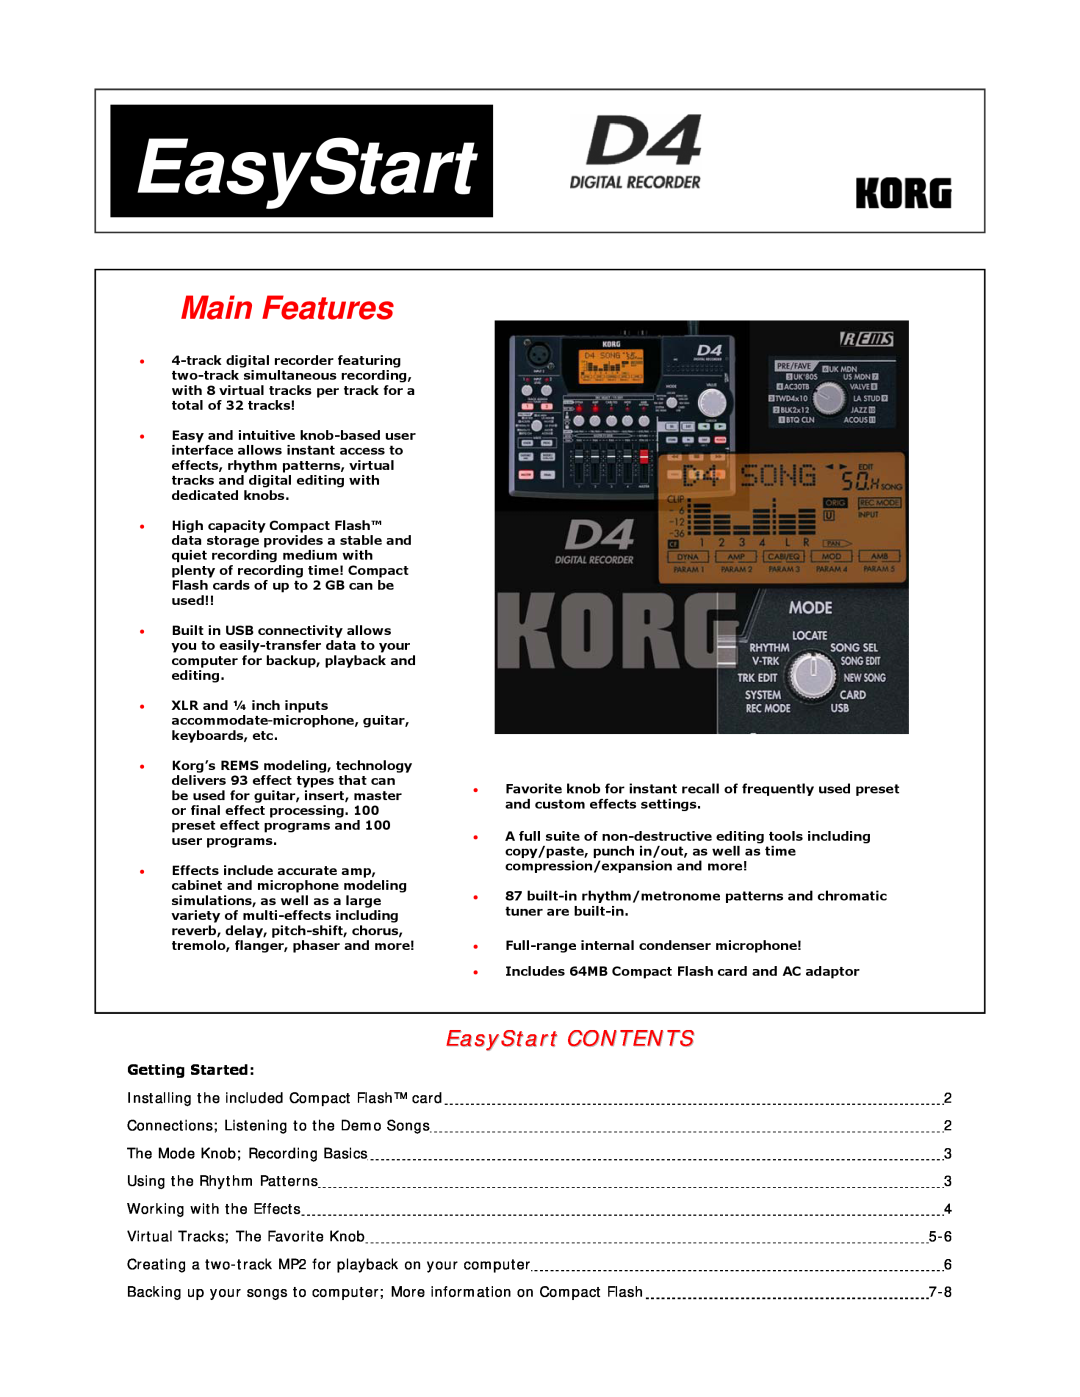 Korg D4 manual Main Features, EasyStart CONTENTS 